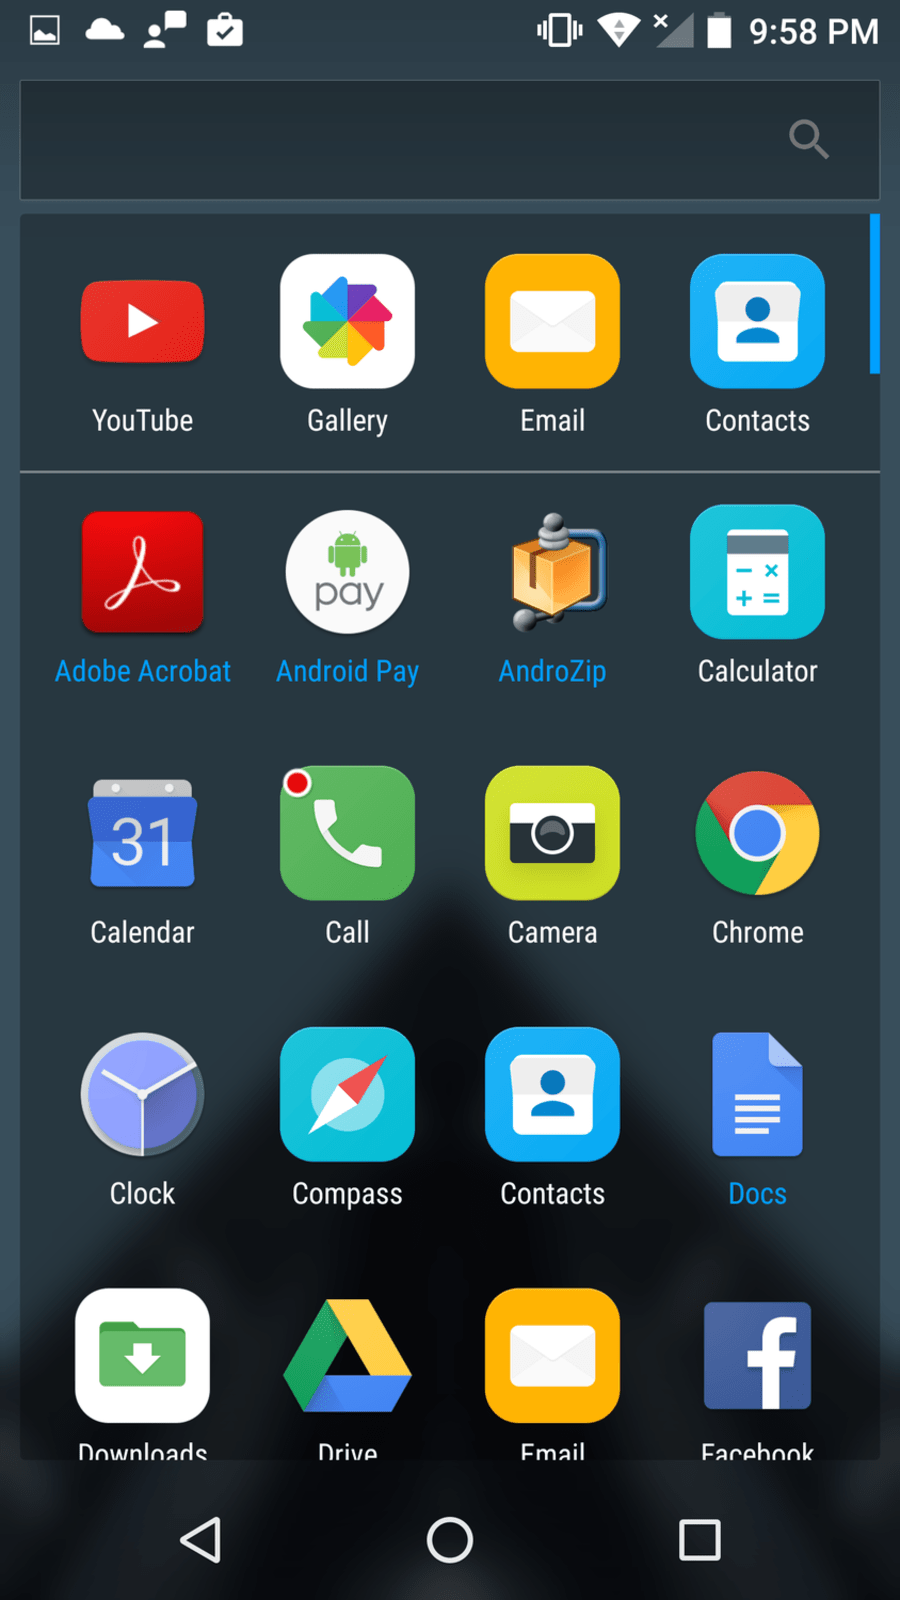 Alcatel IDOL 4S smartphone